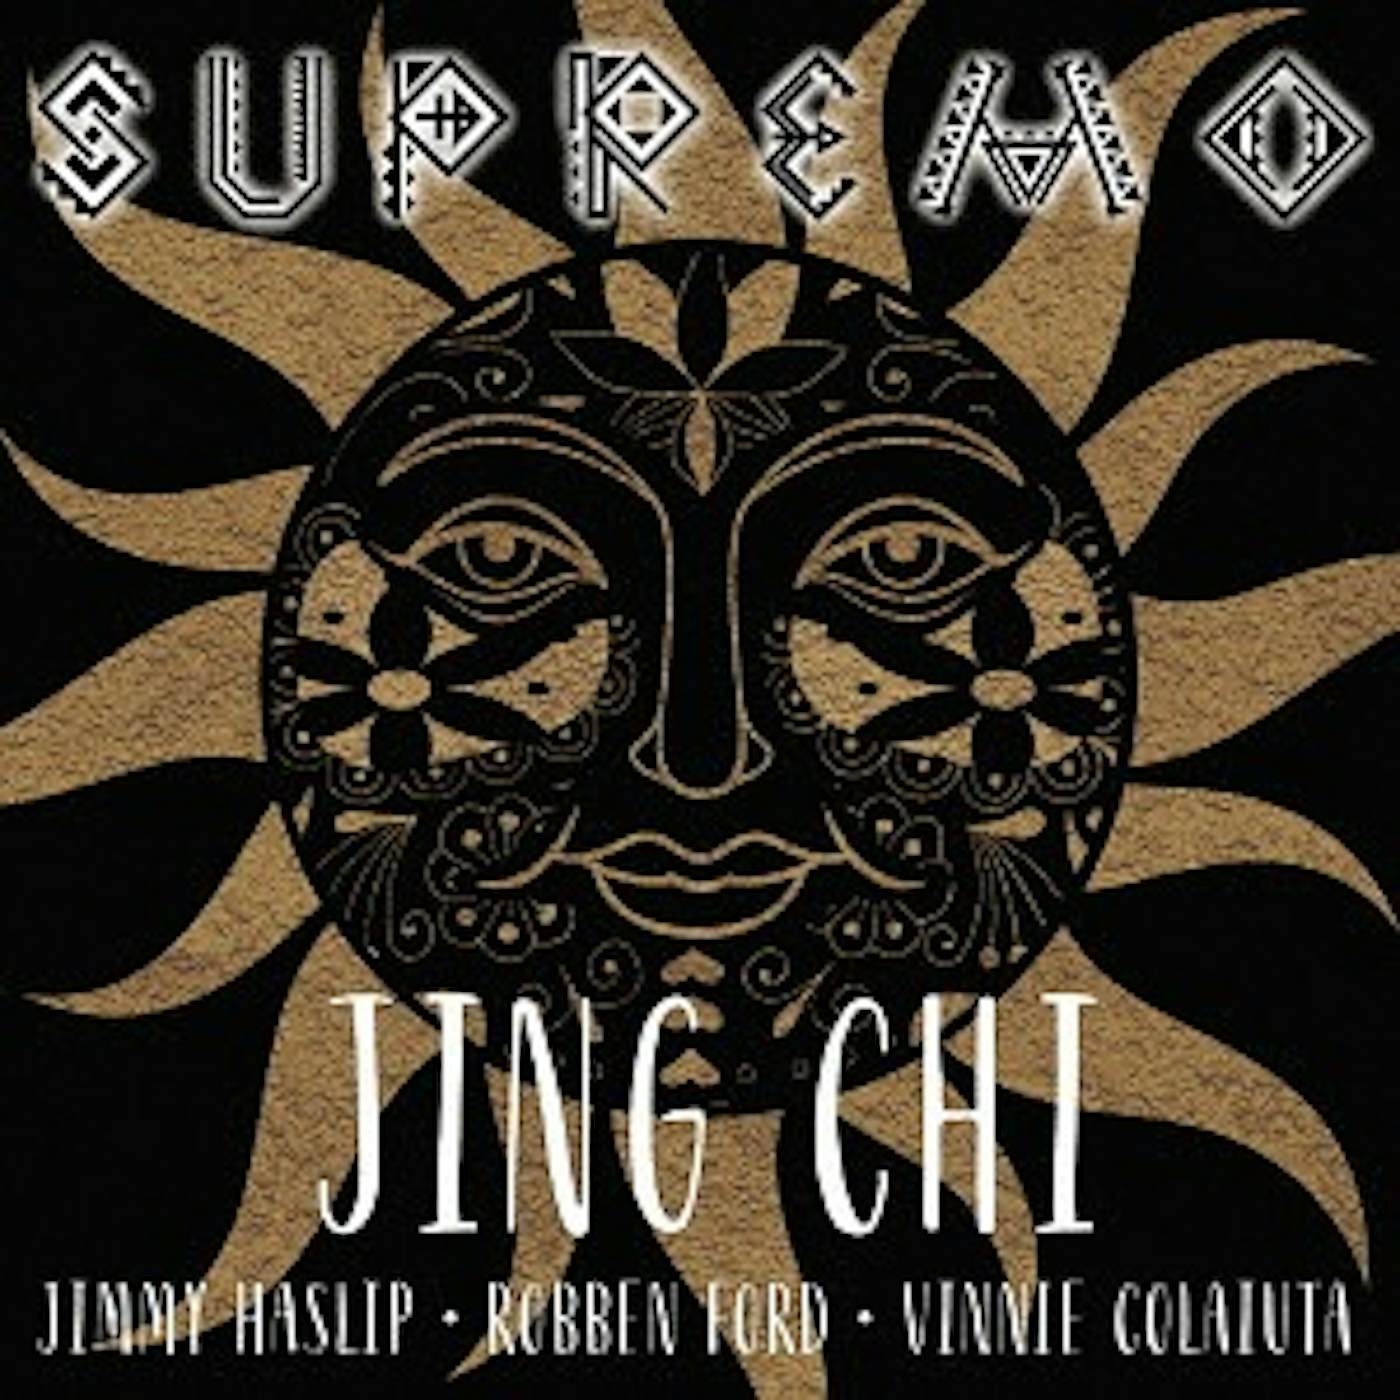 Jing Chi SUPREMO (SHM) CD